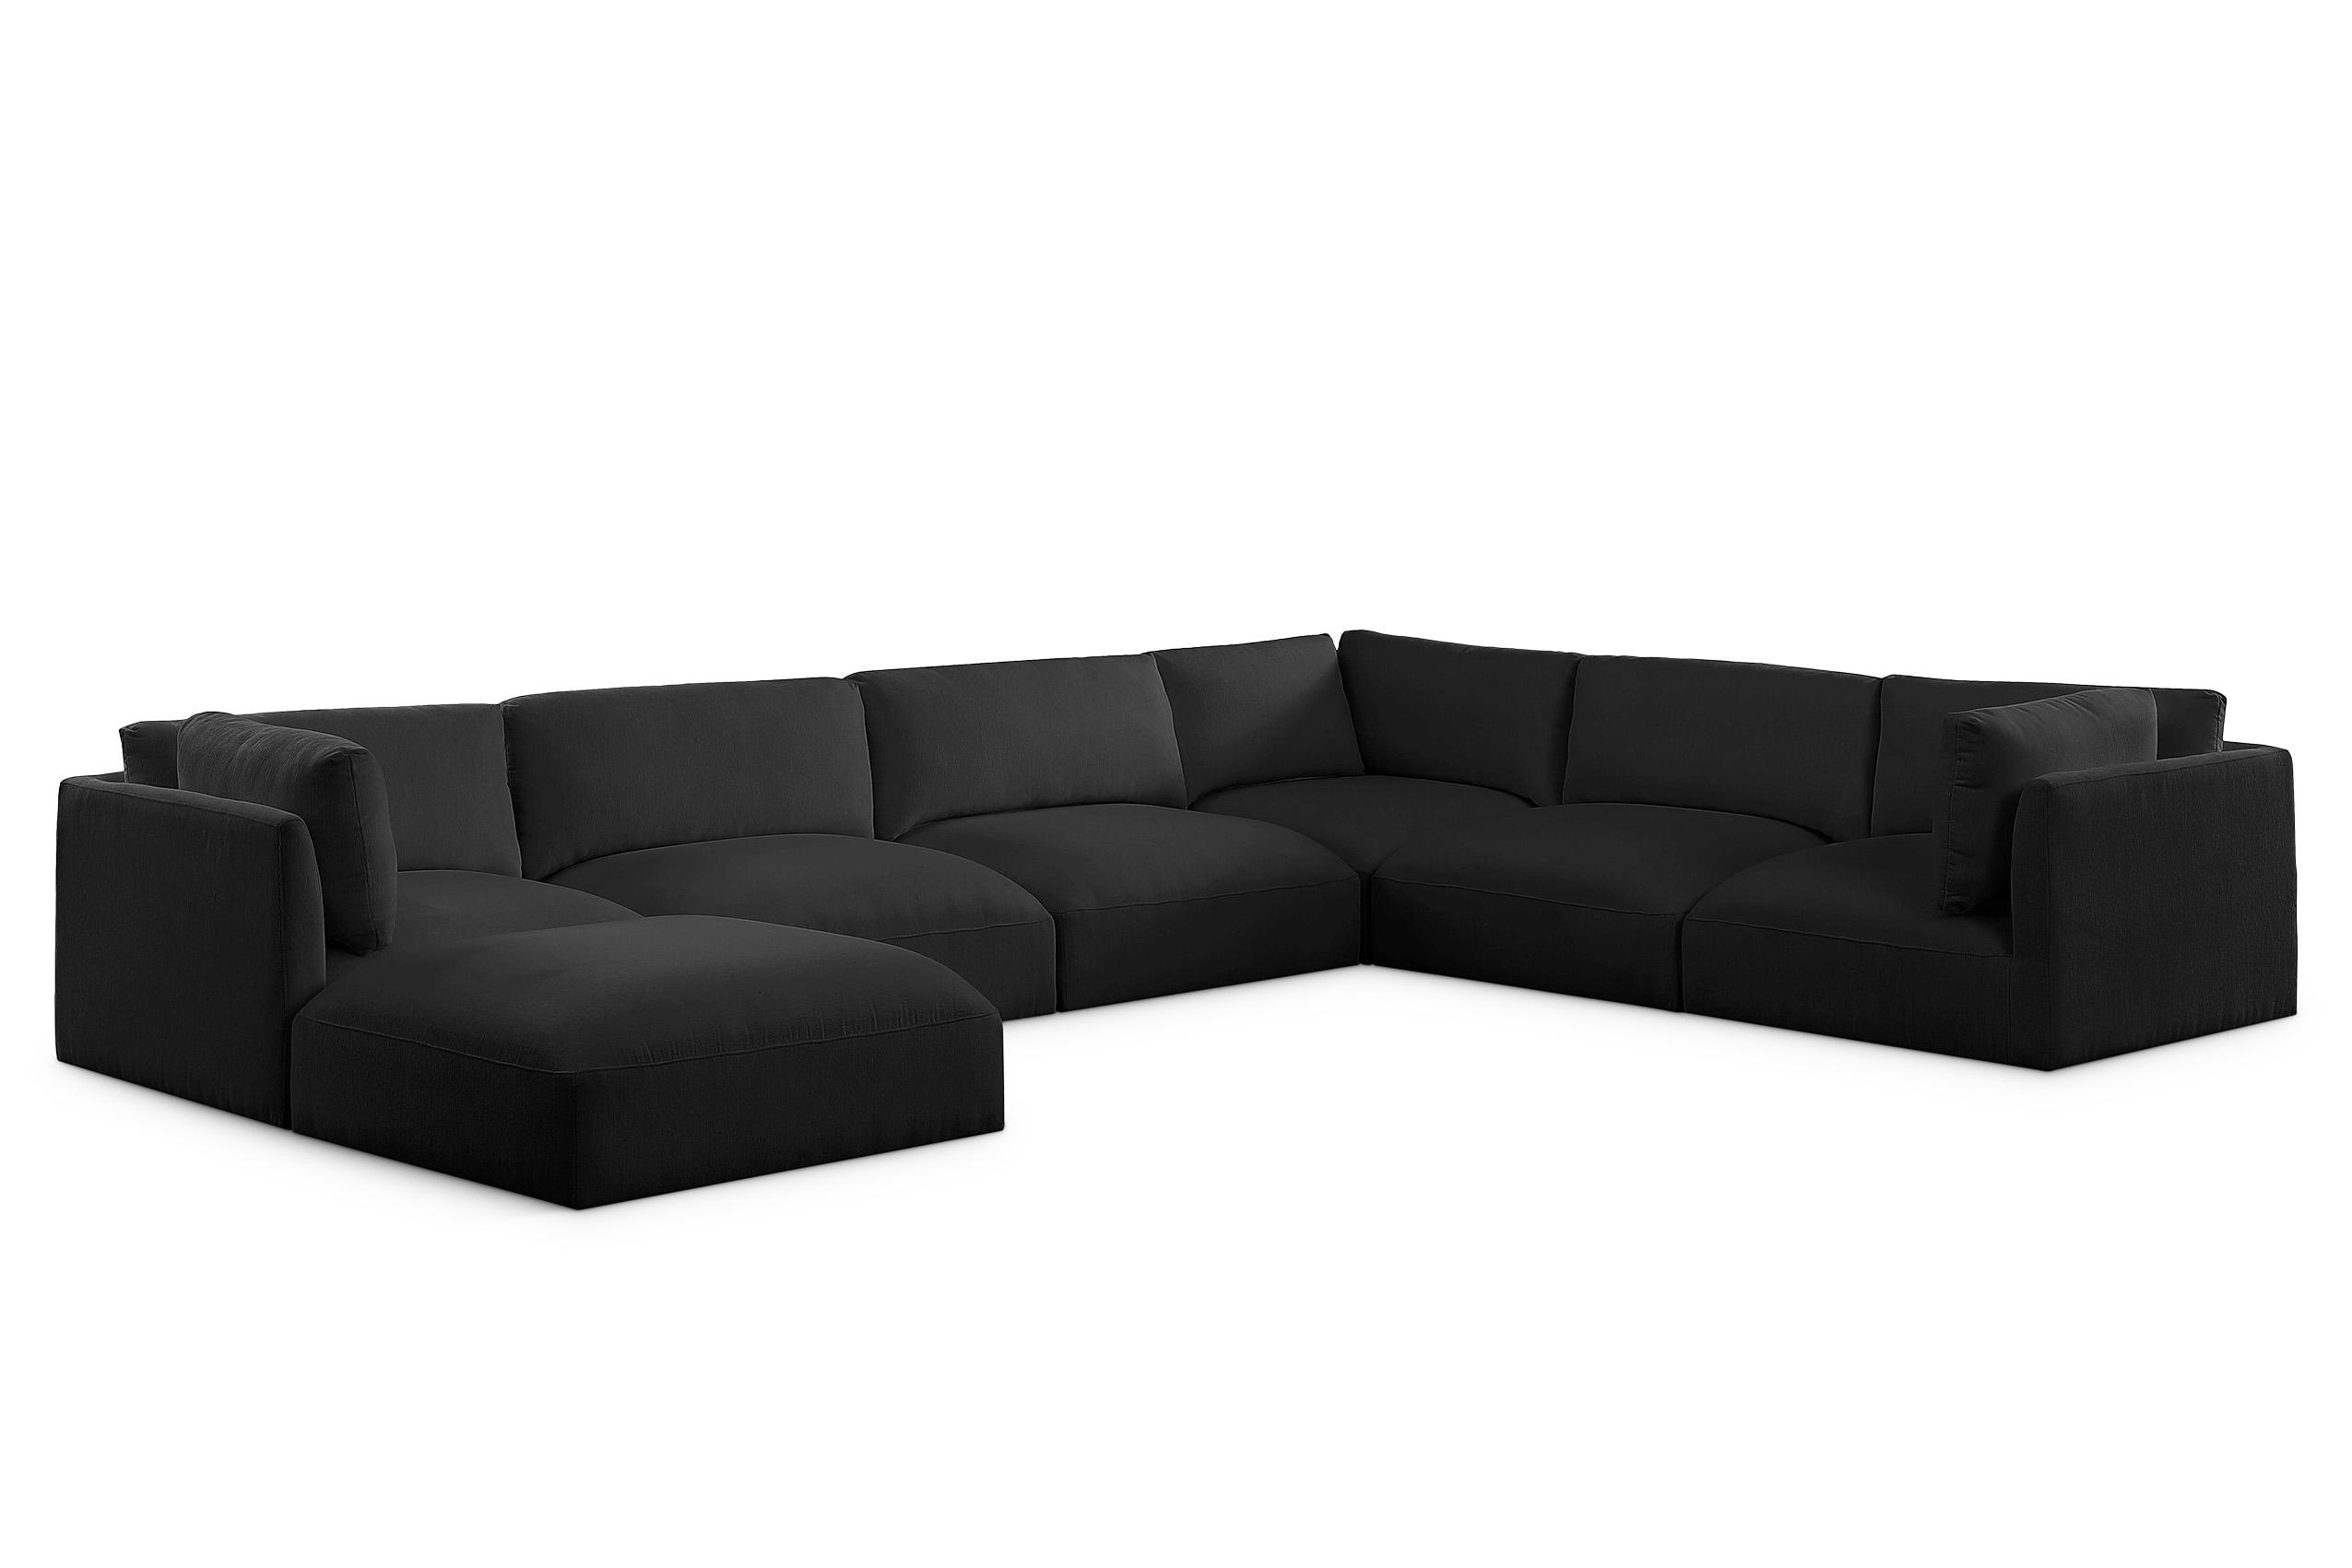 Contemporary, Modern Modular Sectional Sofa EASE 696Black-Sec7A 696Black-Sec7A in Black Fabric